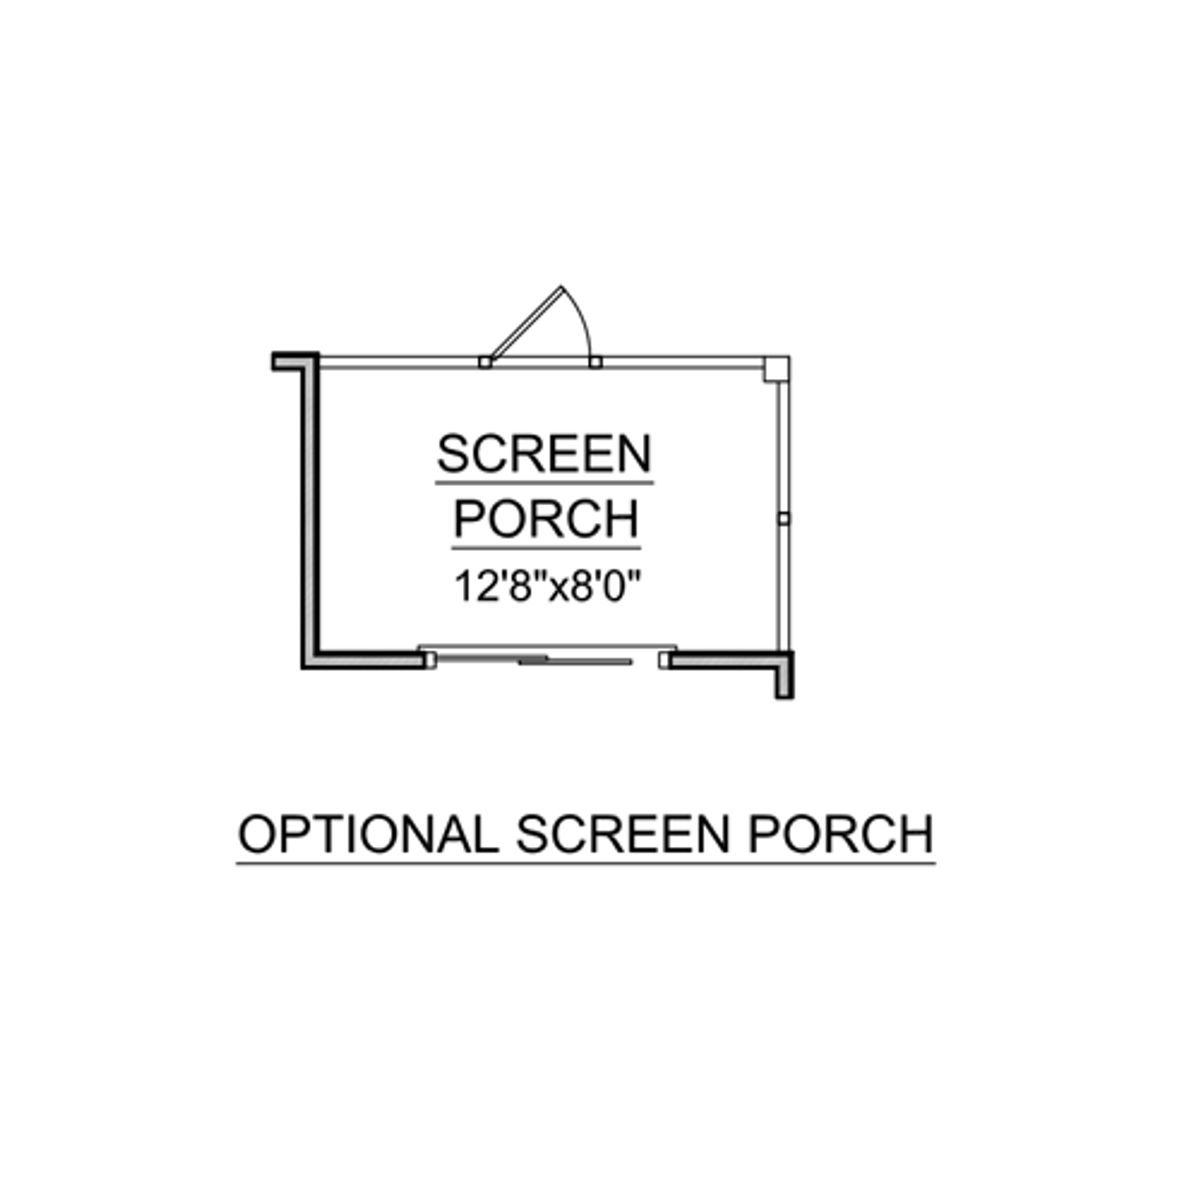 Optional Screen Porch